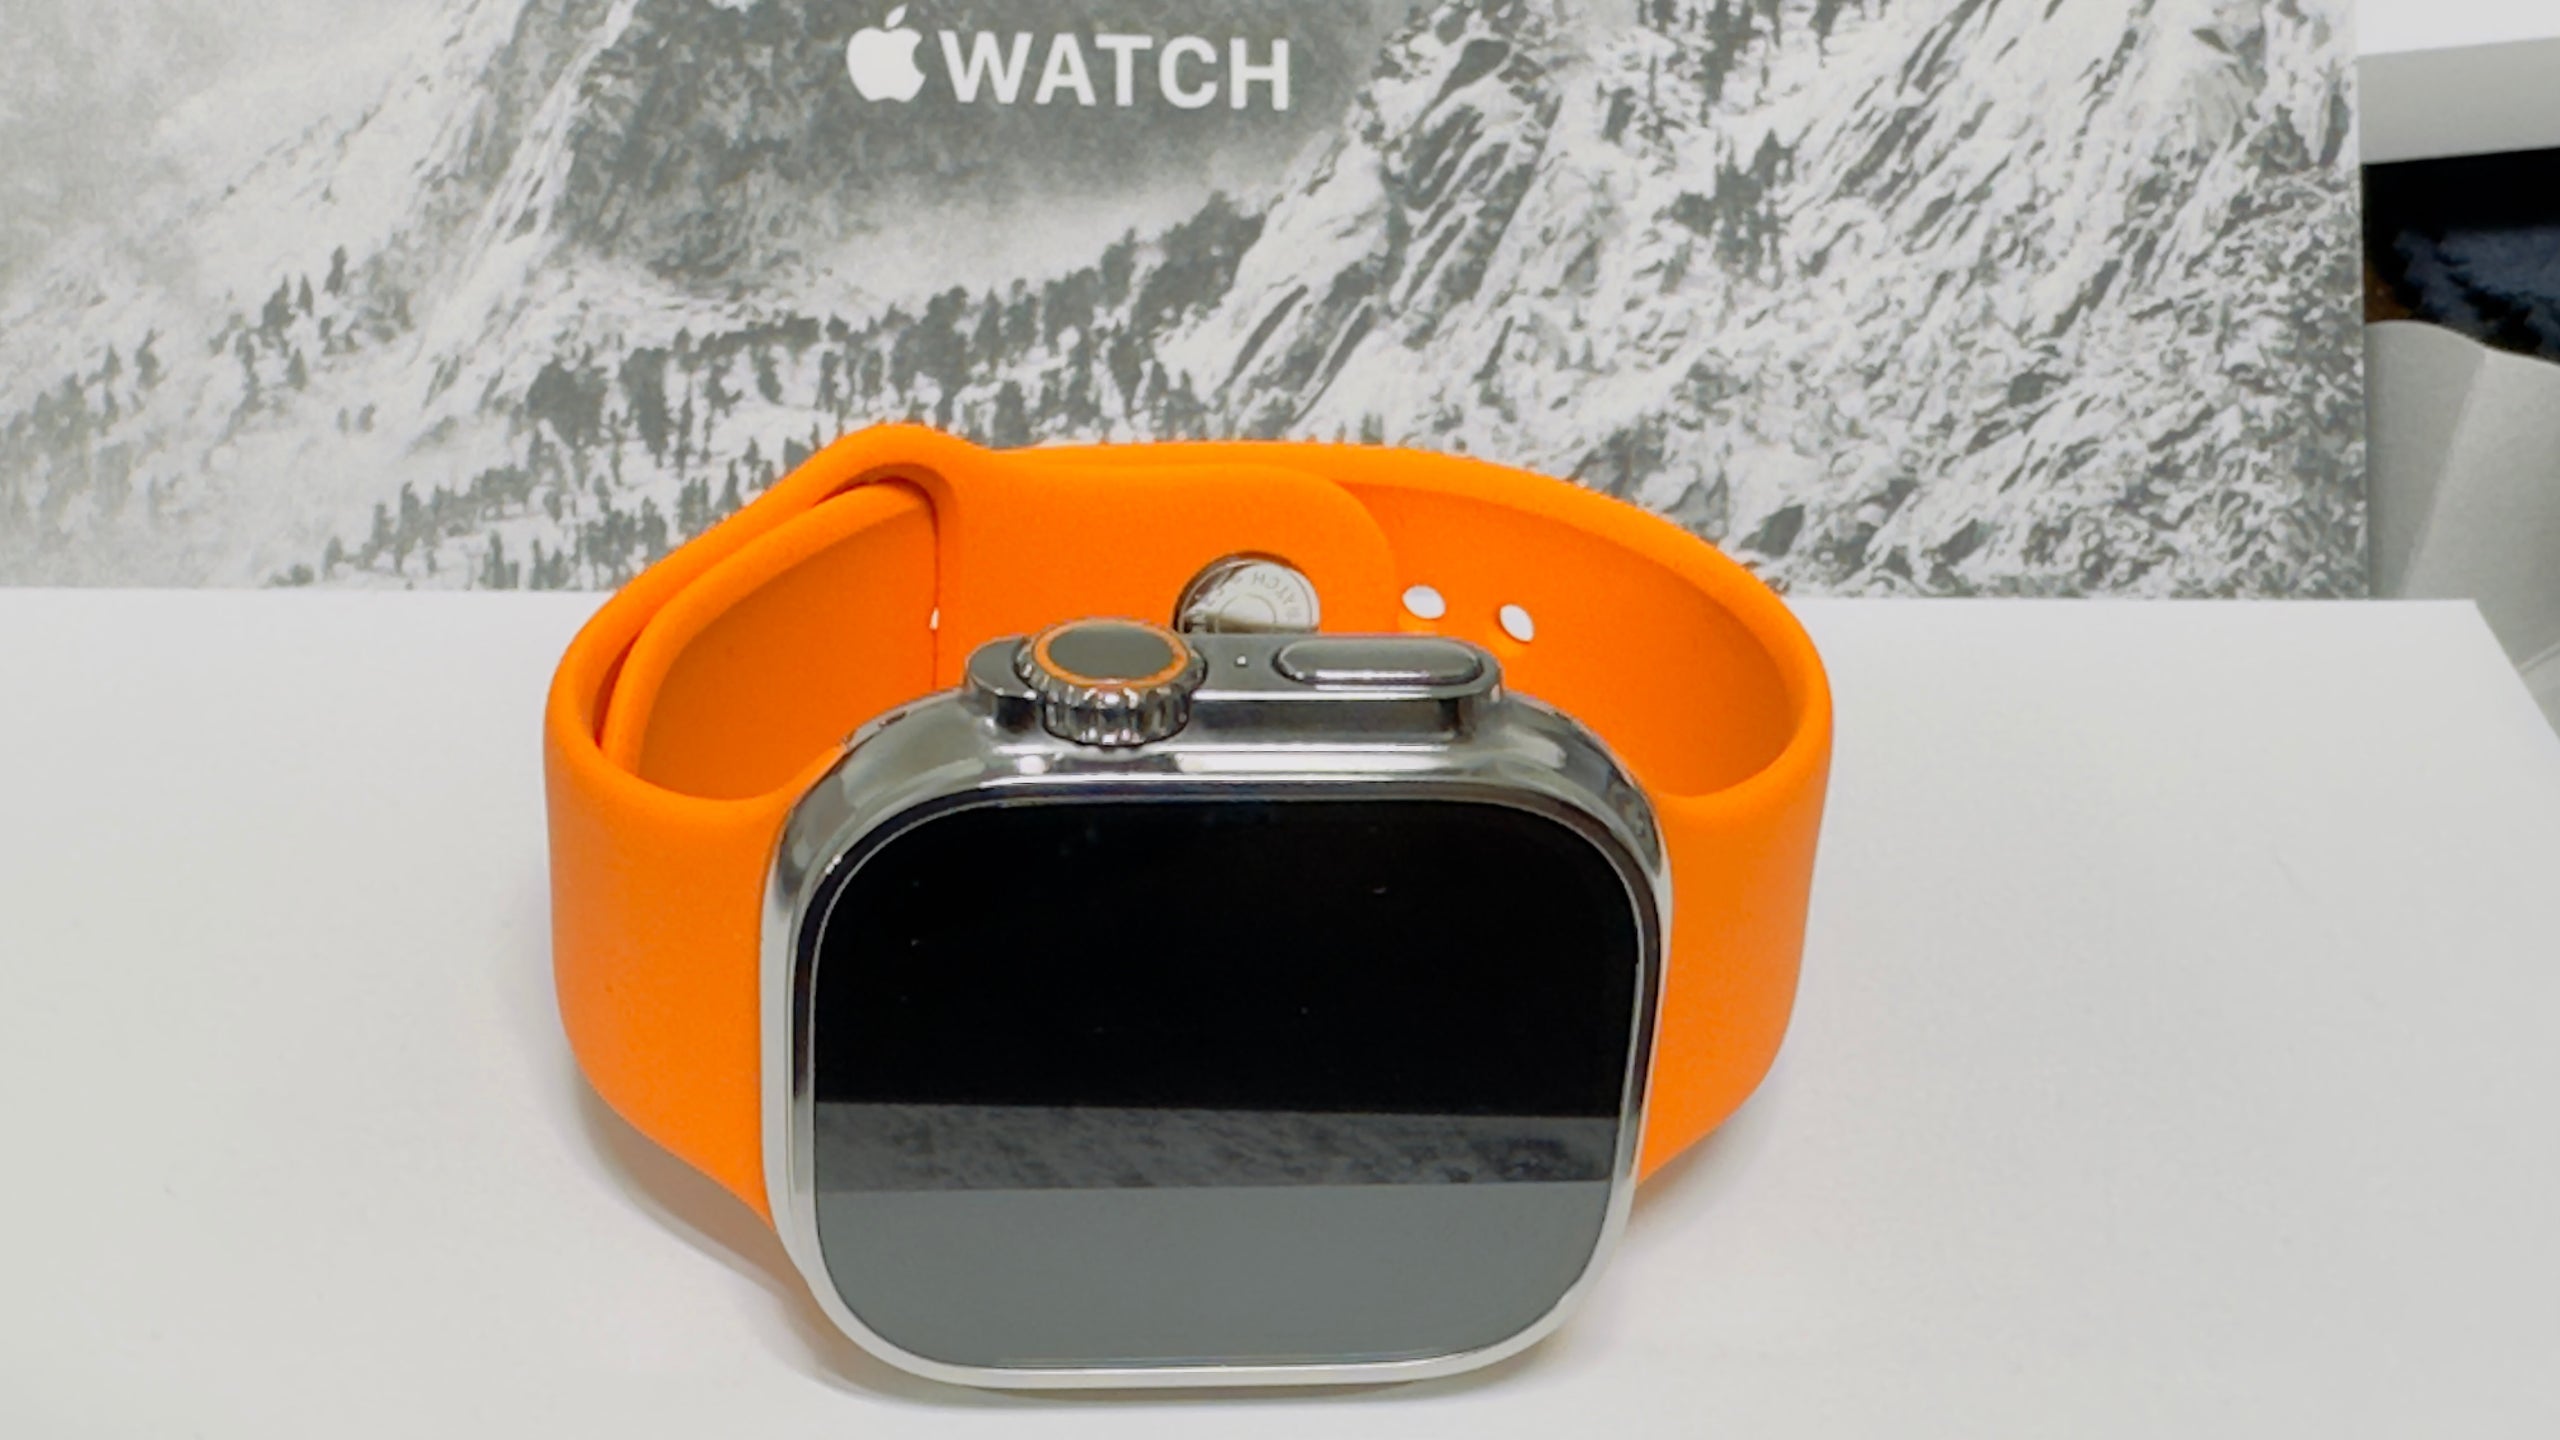 Apples in Orange Boxes: The Apple Watch Hermès